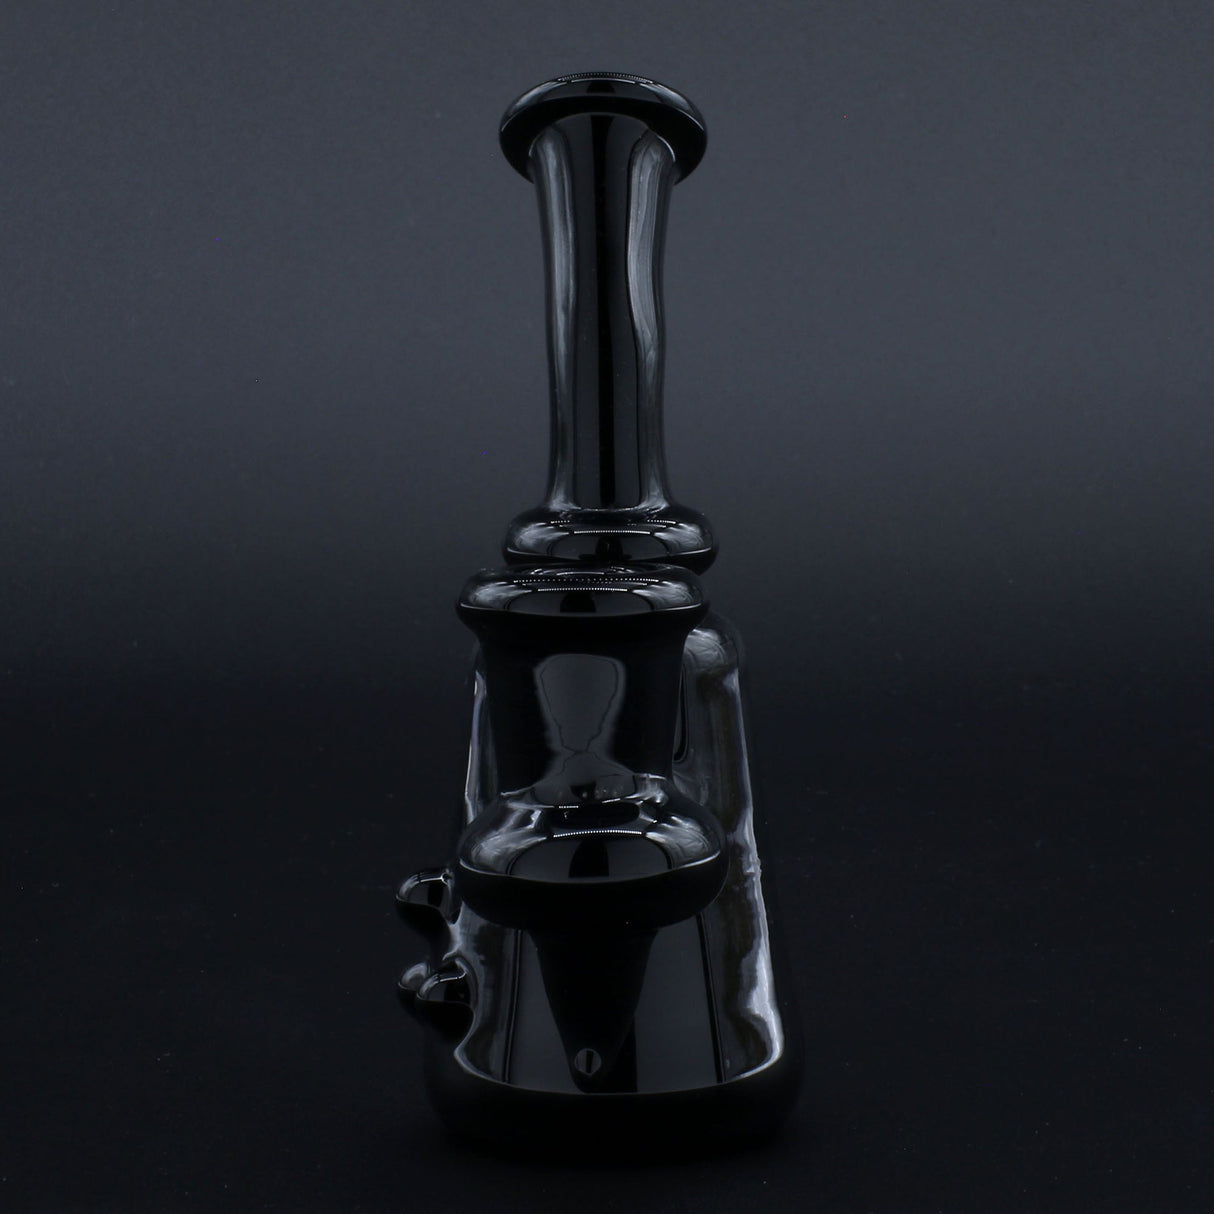 Clayball Glass "Black Jack" Heady Sherlock Dab Set front view on dark background